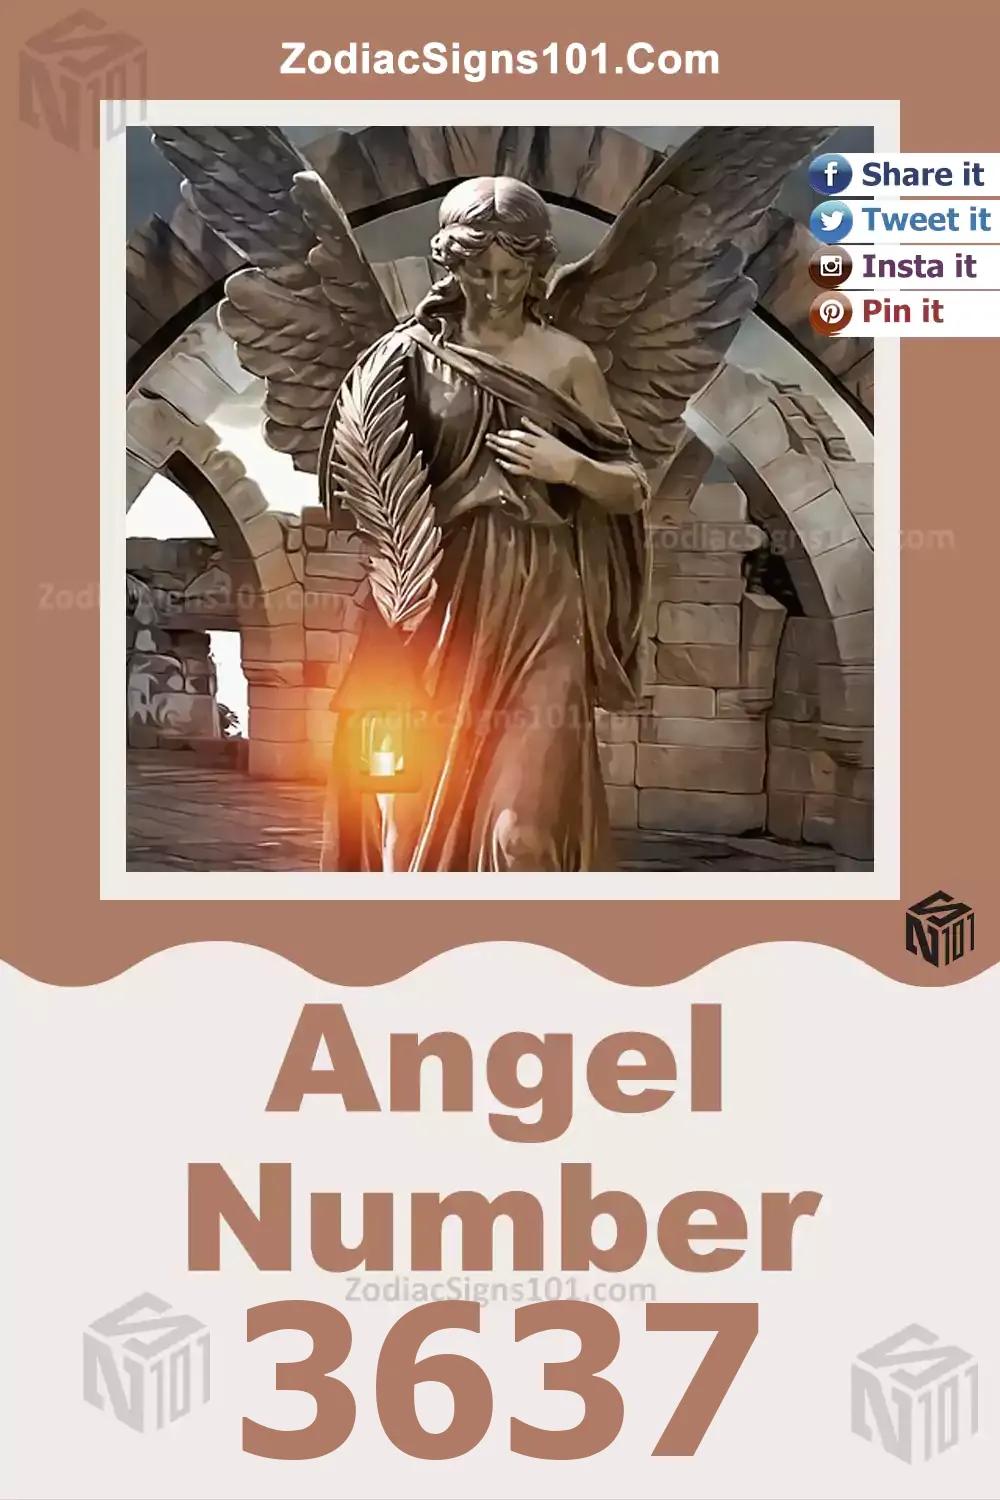 3637-Angel-Number-Meaning.jpg